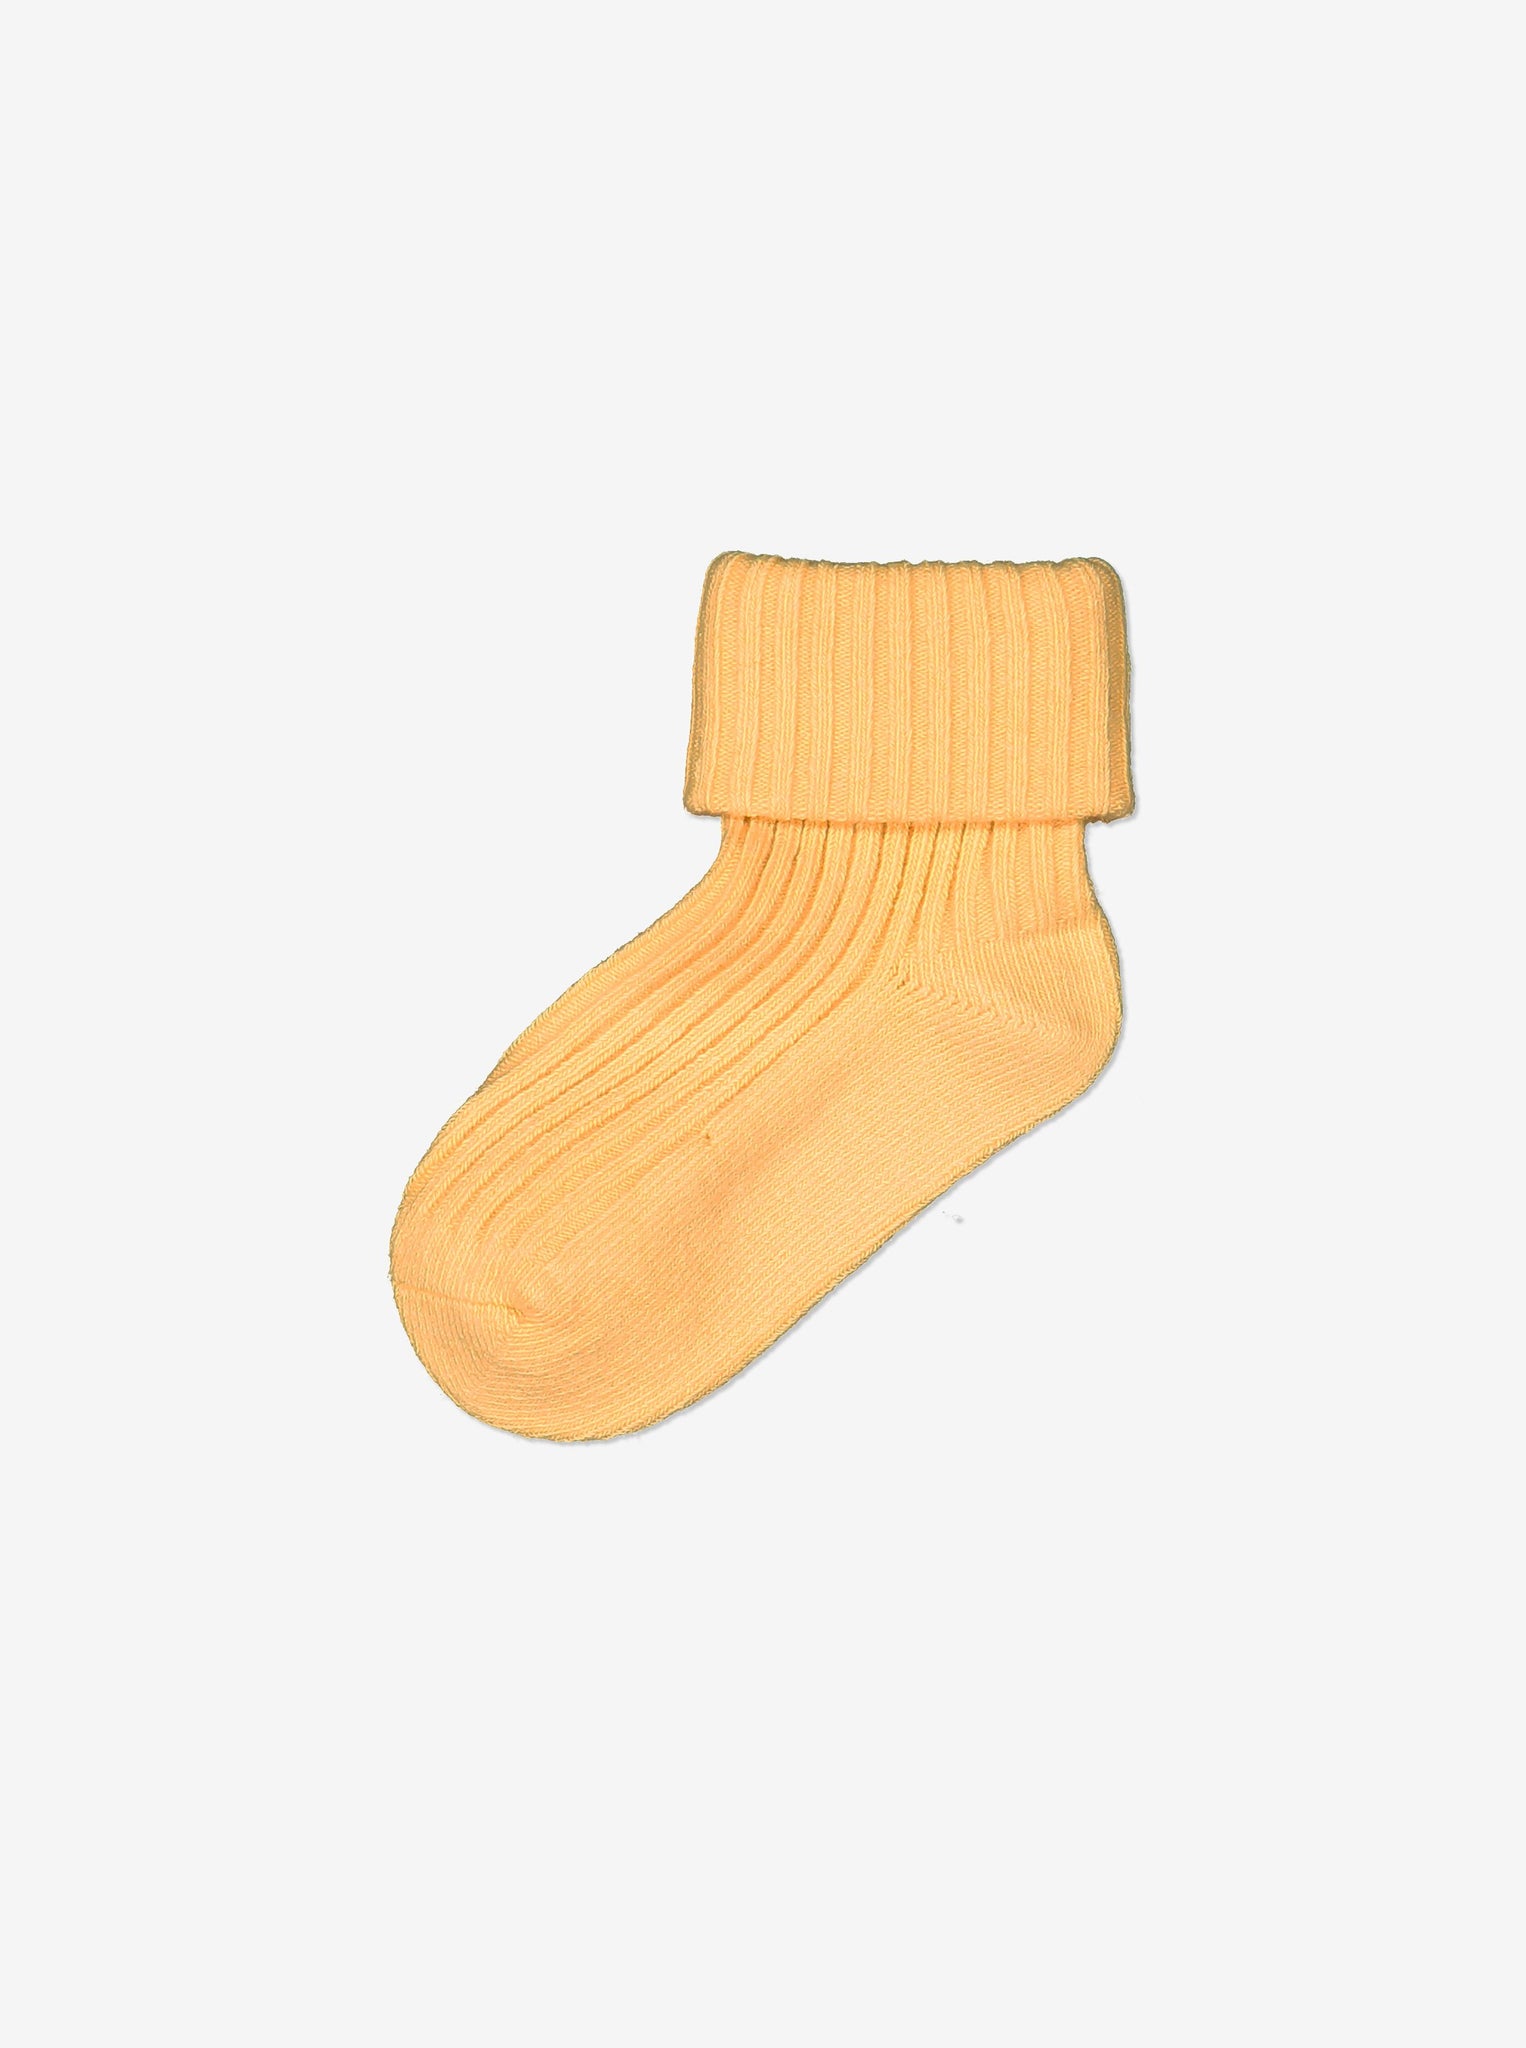 Unisex Yellow Soft Baby Socks